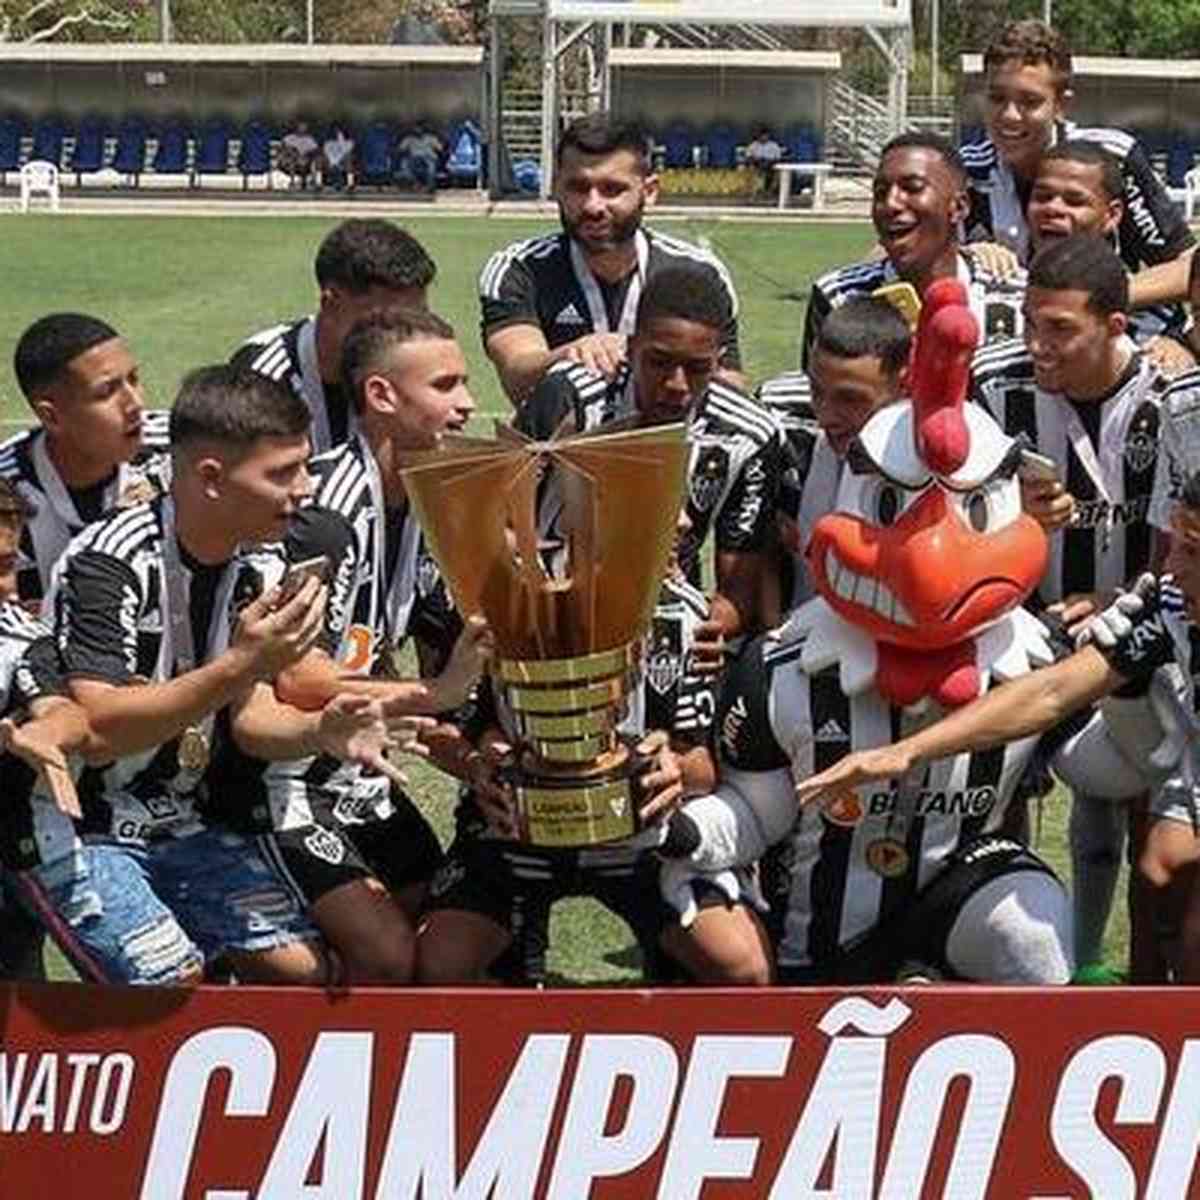 Galo sub-15 está na Copa 2 Julho – Clube Atlético Mineiro